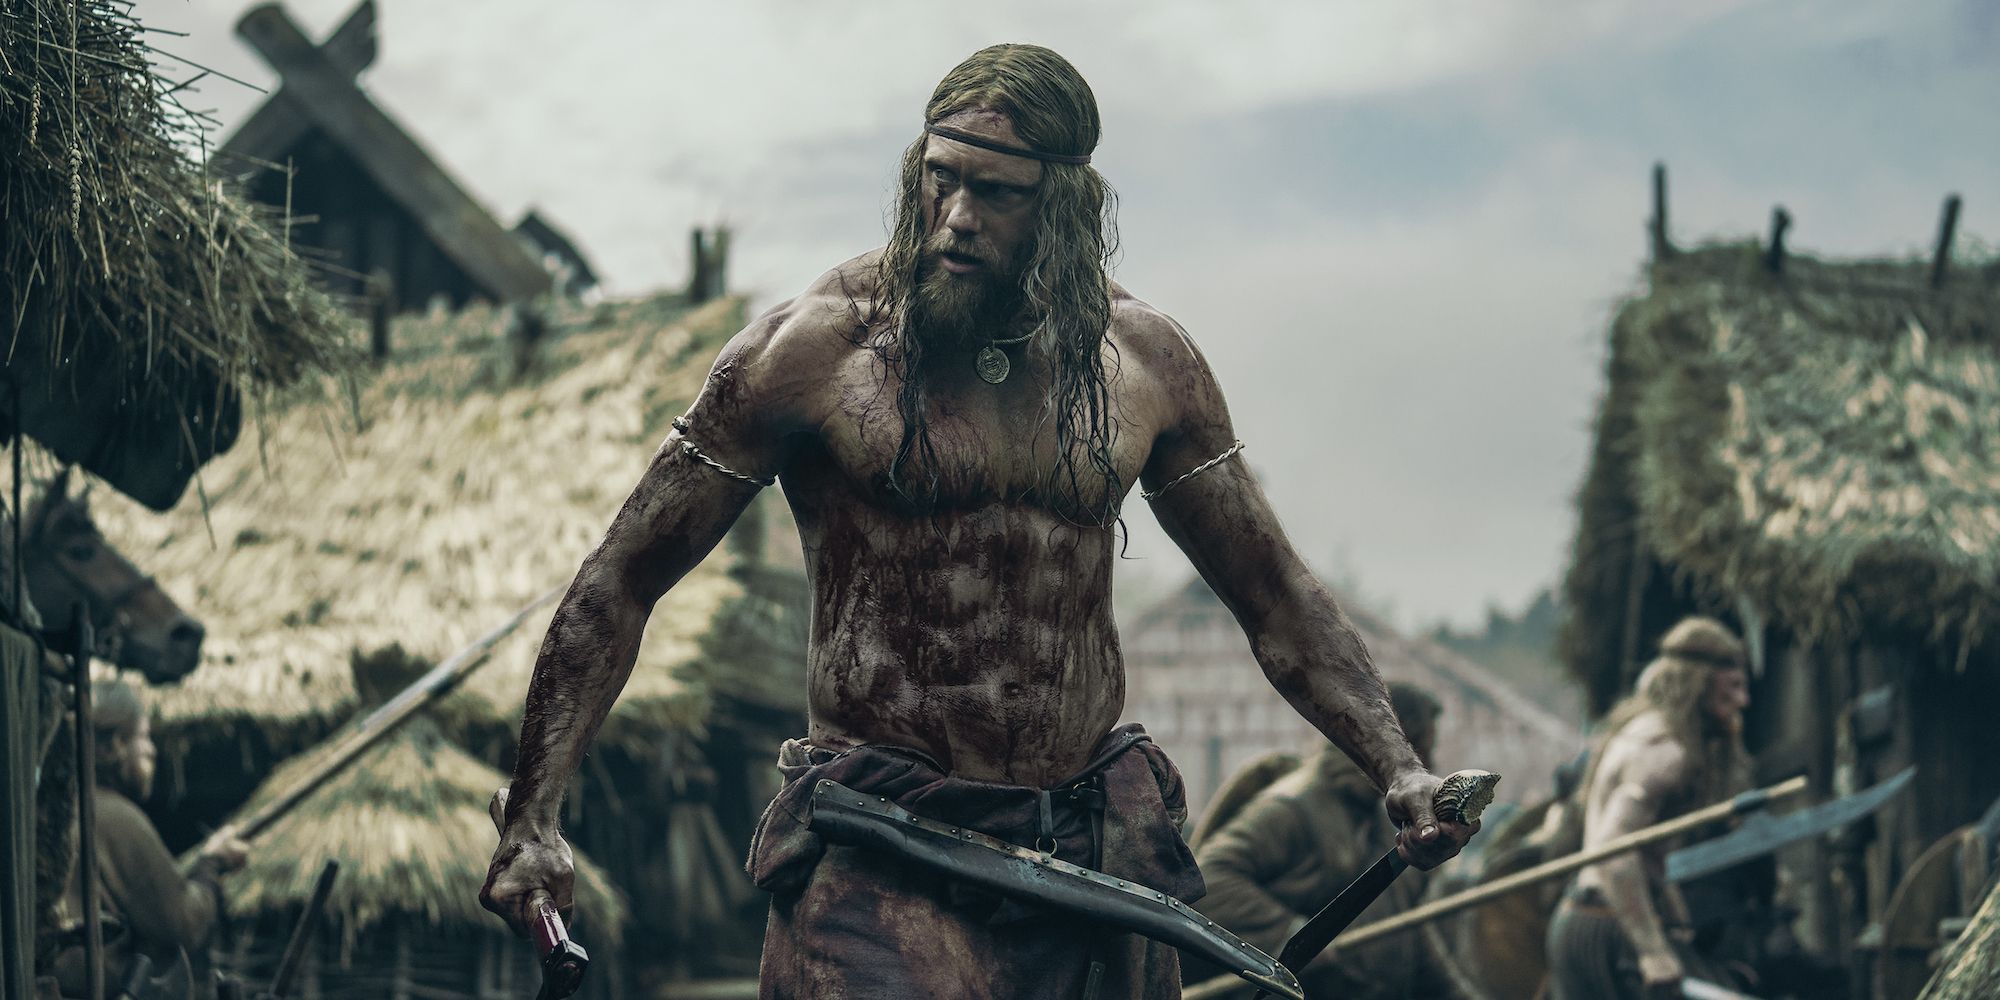 The Northman Review: La epopeya vikinga de Eggers es brutal y emocionante, pero le falta